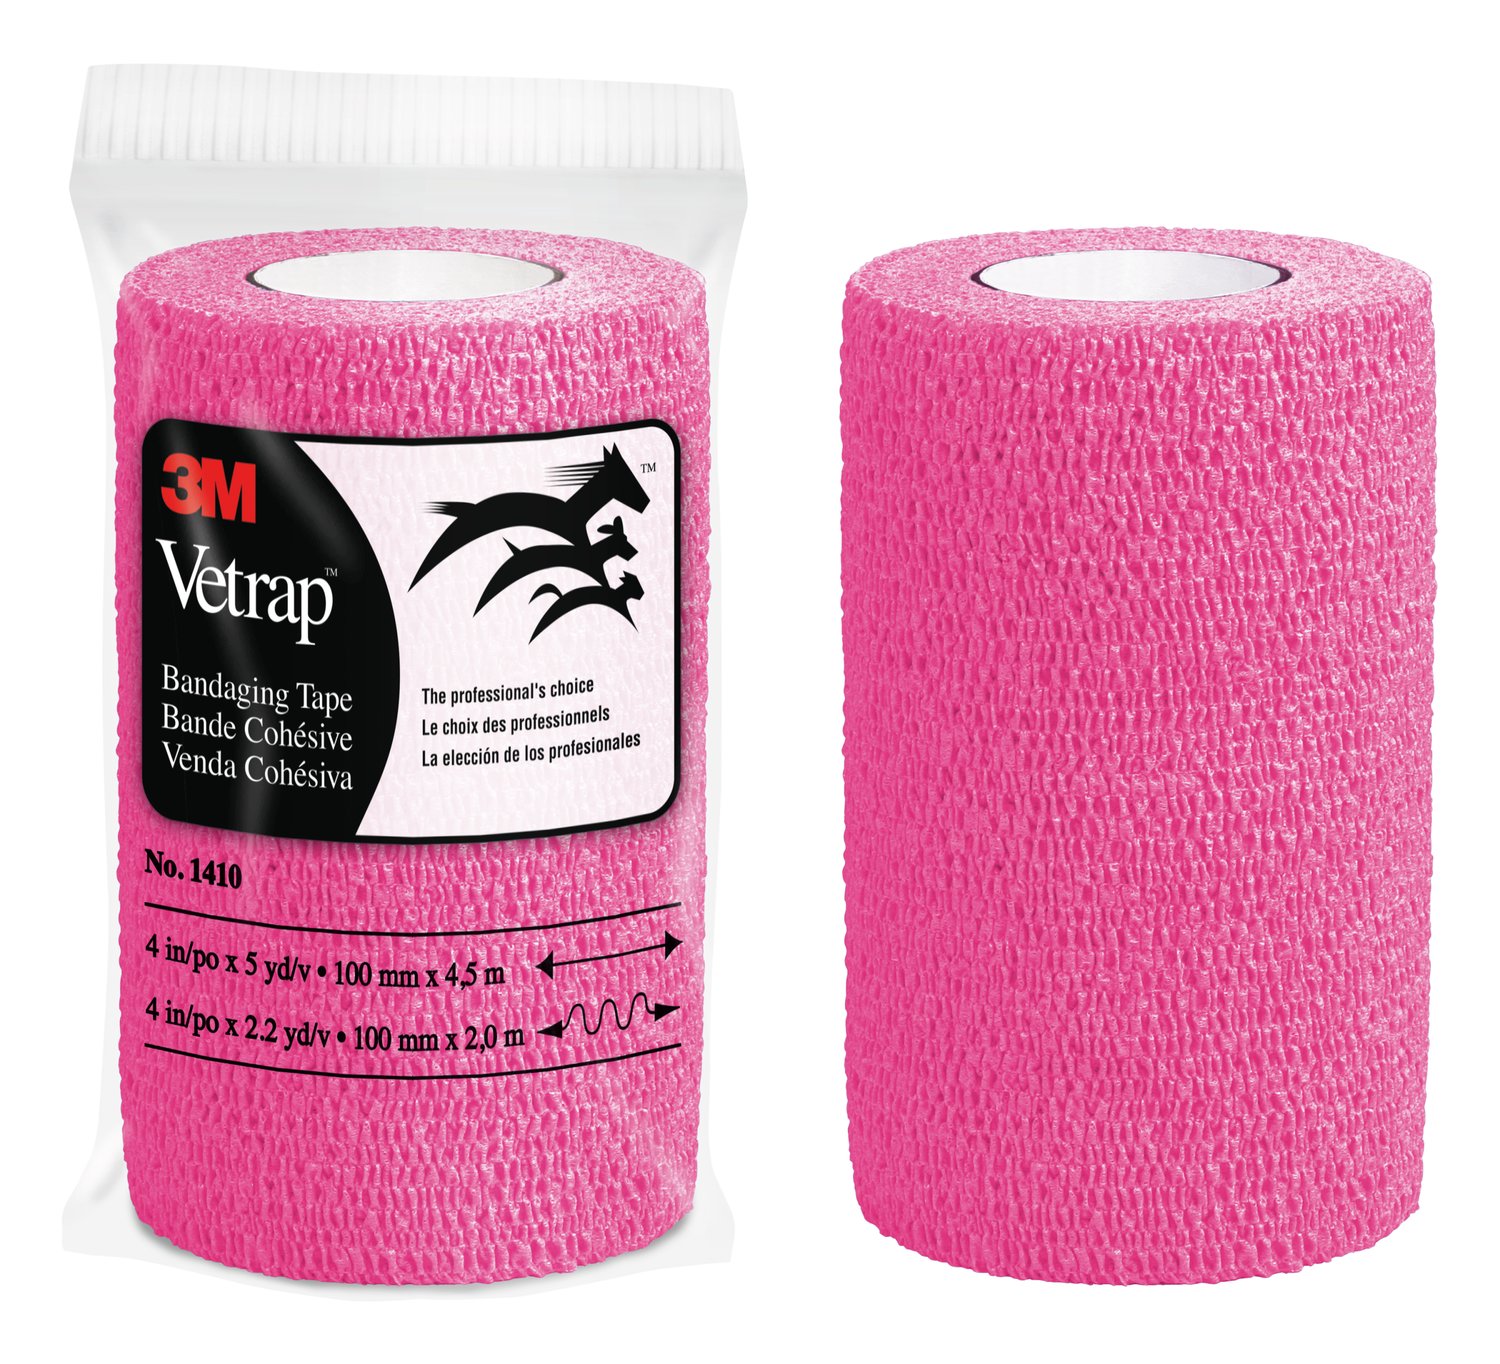 7000053655 - 3M Vetrap Bandaging Tape Bulk Pack, 1410HP Bulk Hot Pink